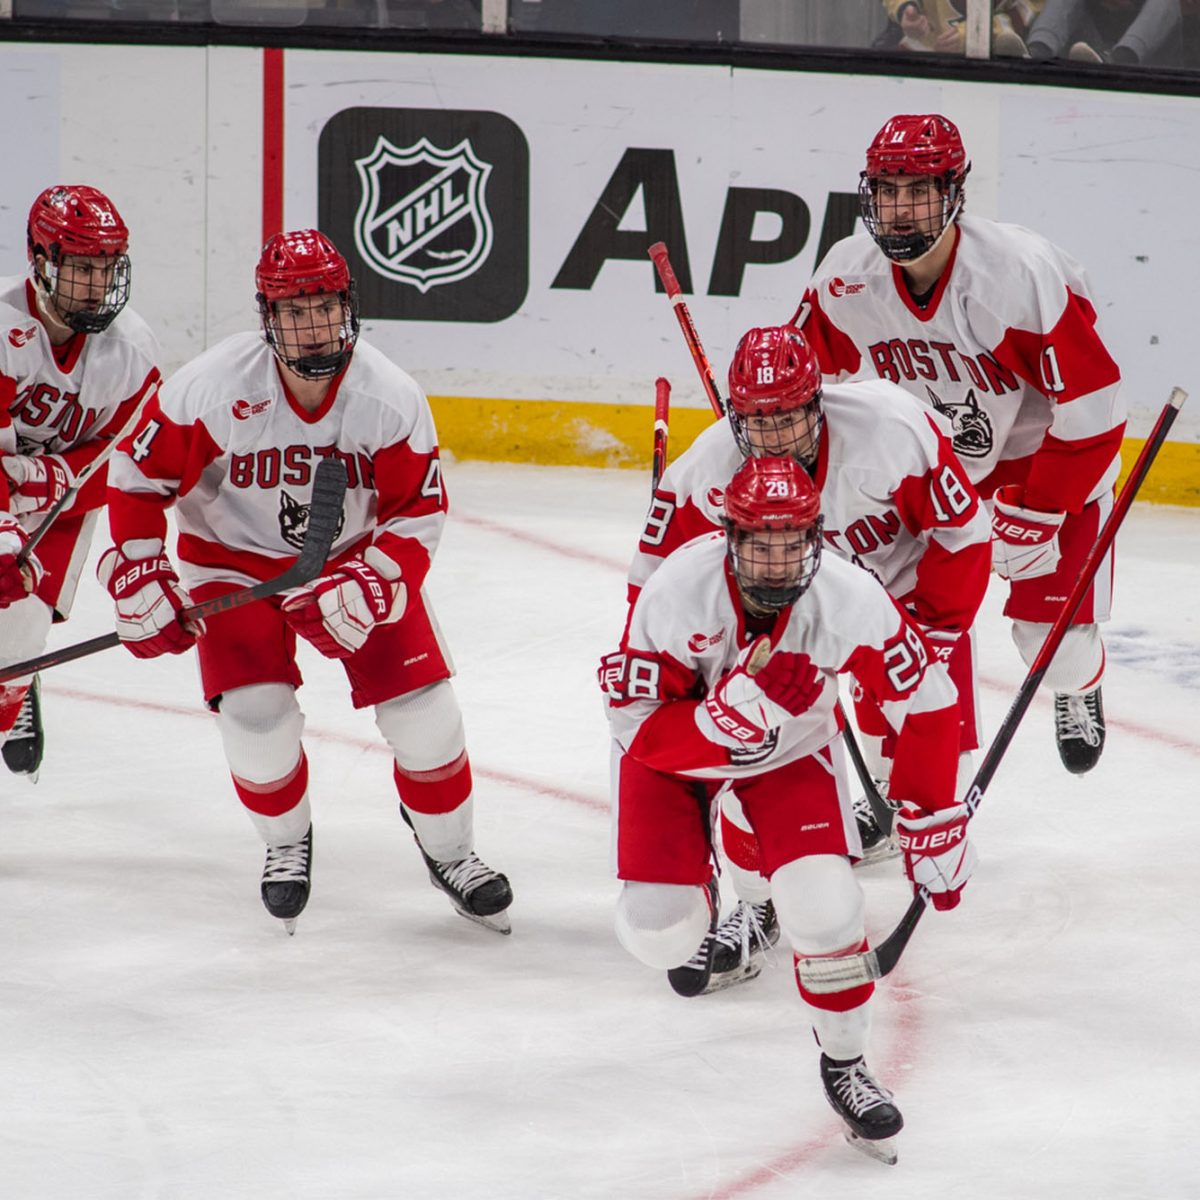 Men's Hockey to Battle Boston University for Beanpot Crown, Sports